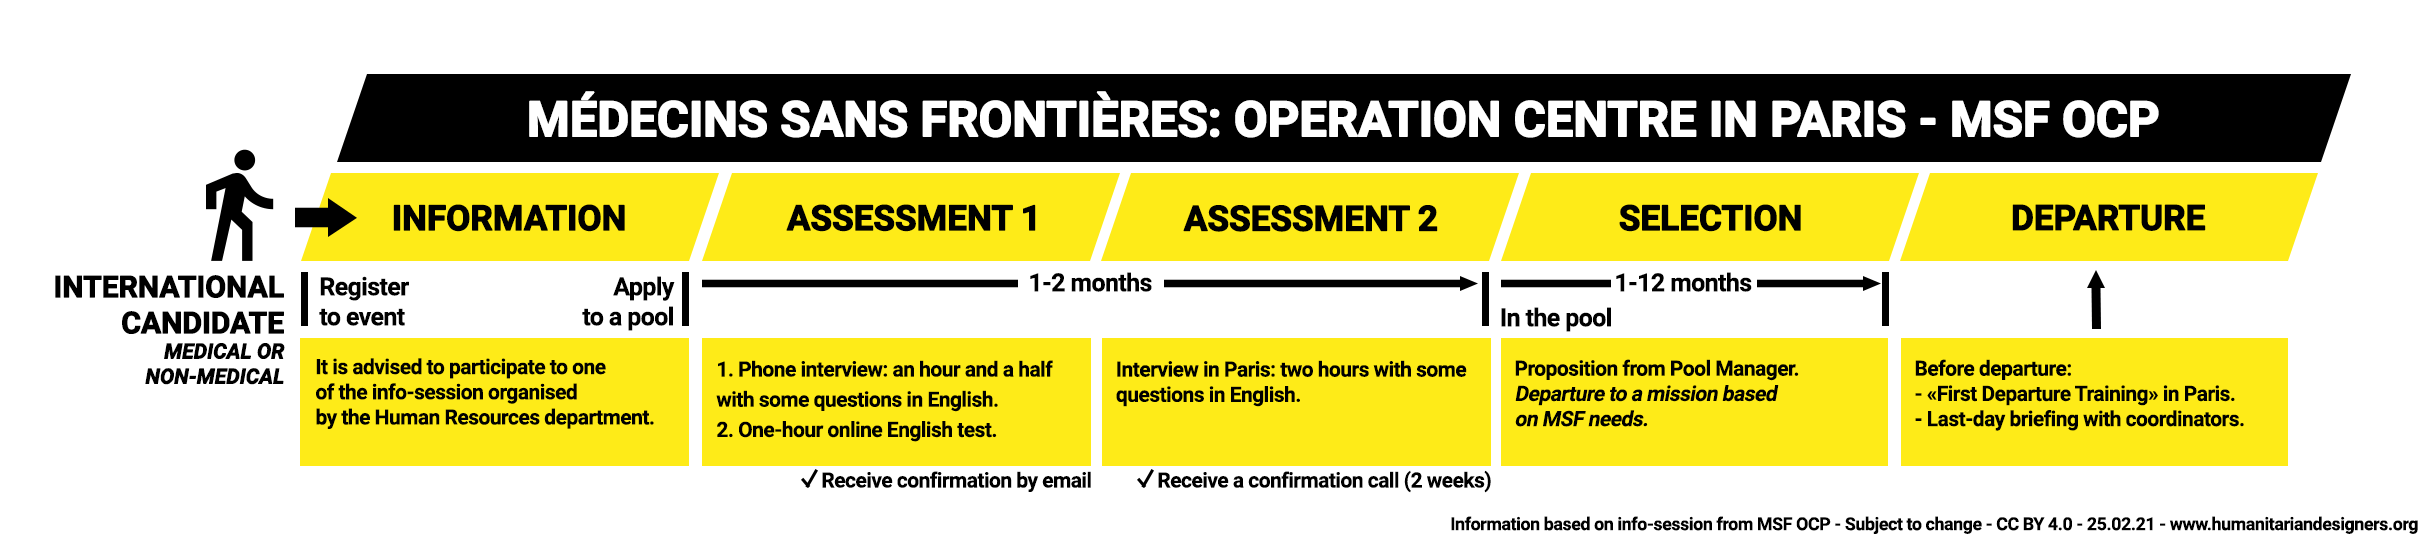 Médecins Sans Frontières Operational Centre Paris - Recruiting process MSF OCP